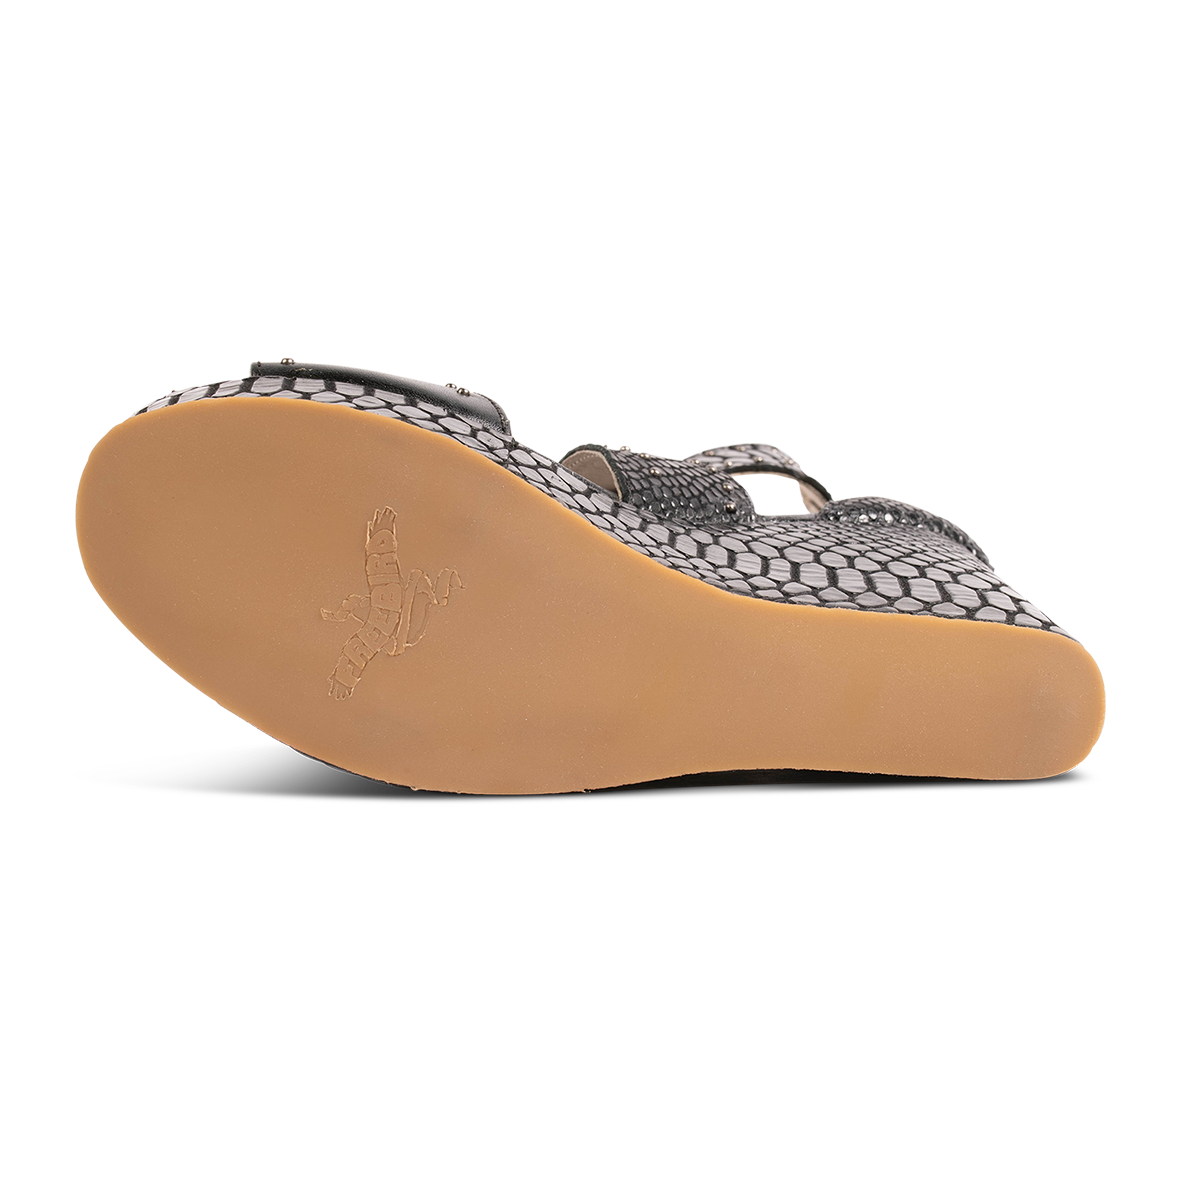 Rubber sole imprinted with FREEBIRD on women's Terra black snake platform sandal with stud detailing